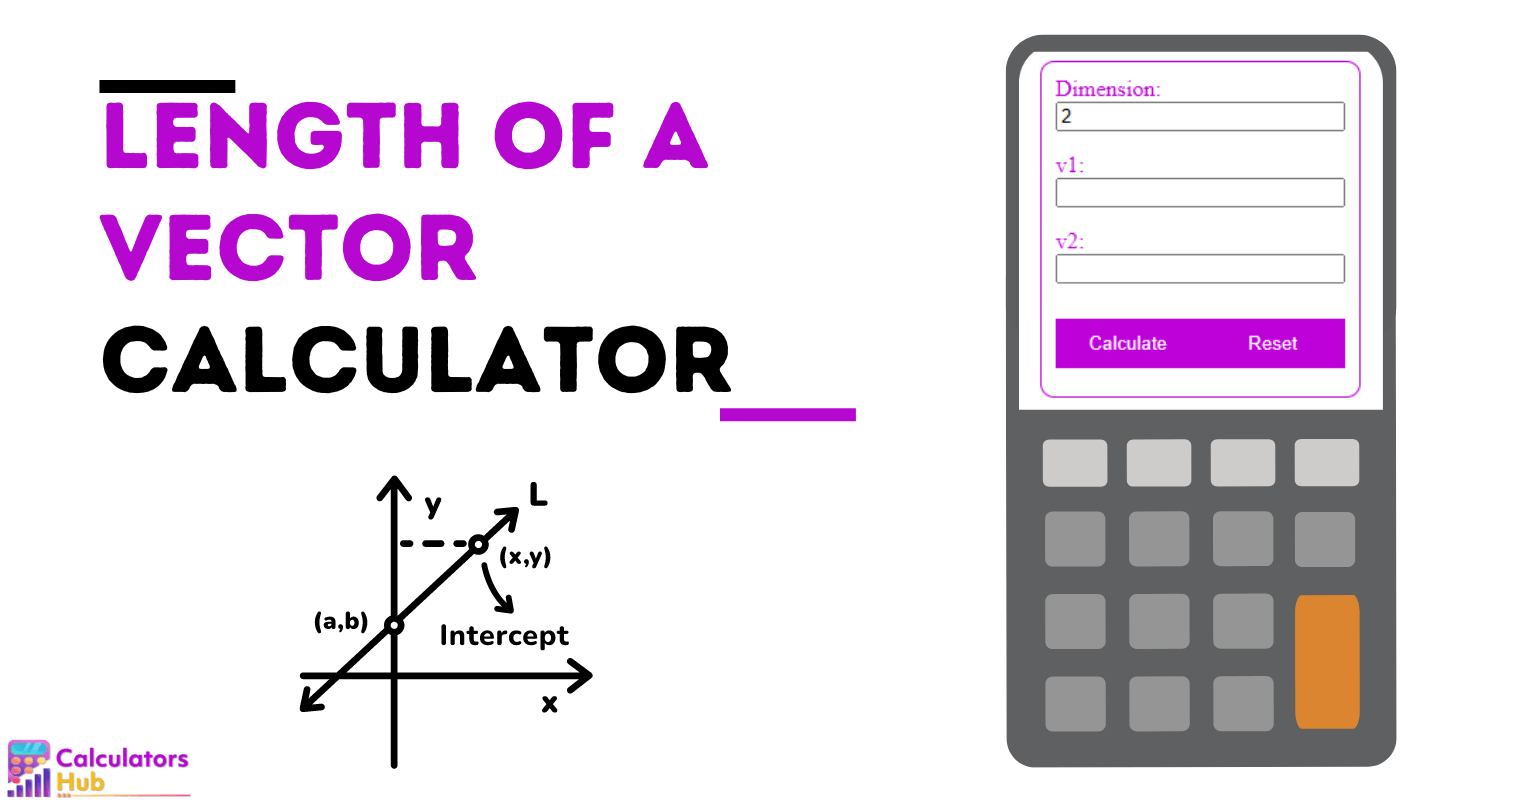 Length of a Vector Calculator